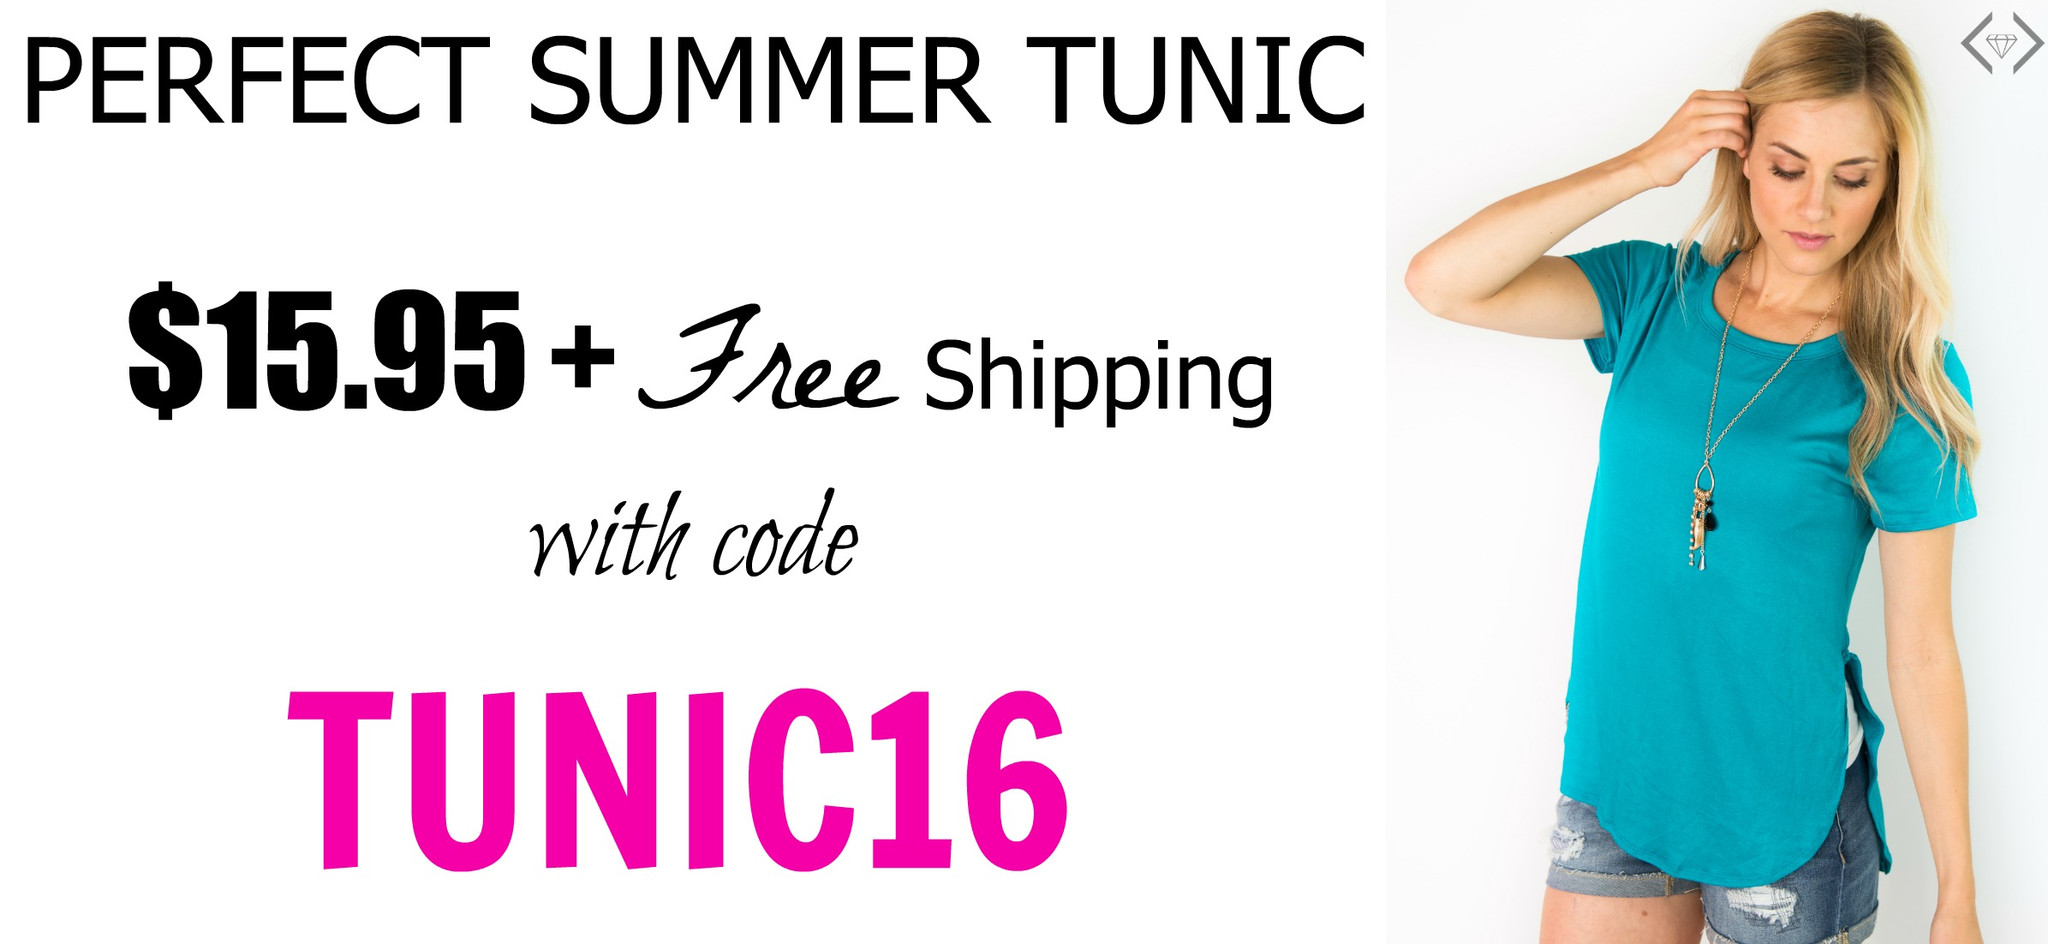 Fun Summer Tunics for $15.95 & FREE SHIPPING!